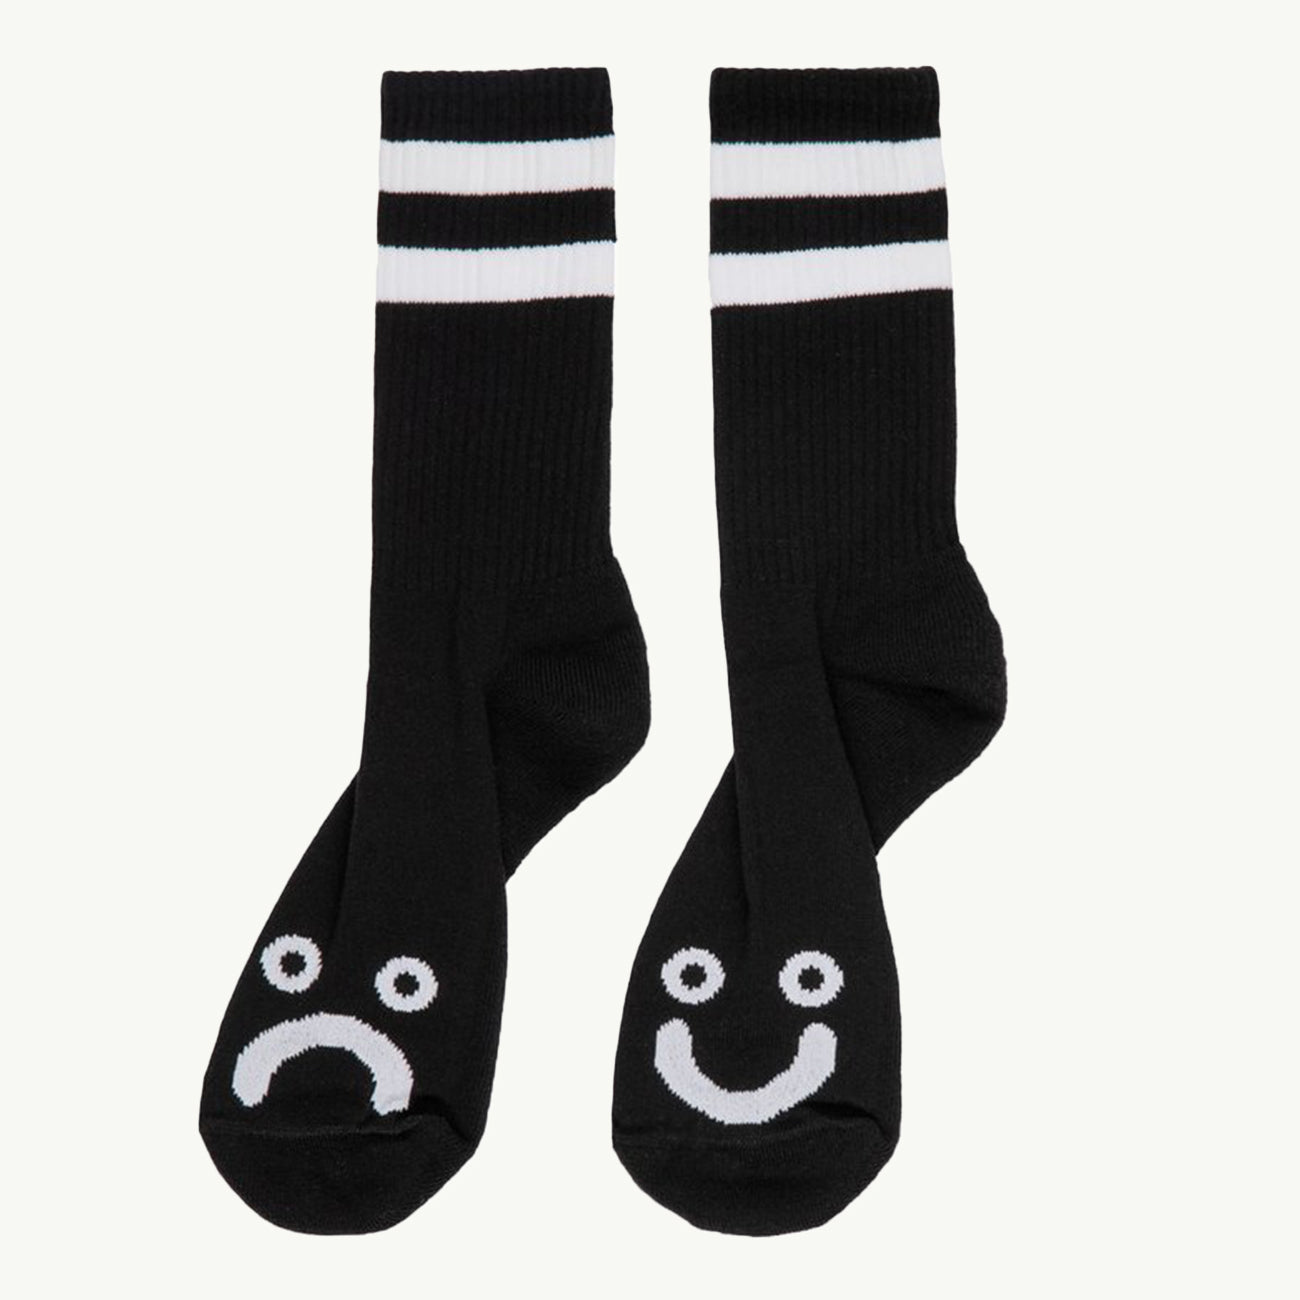 Happy Sad Socks - Black